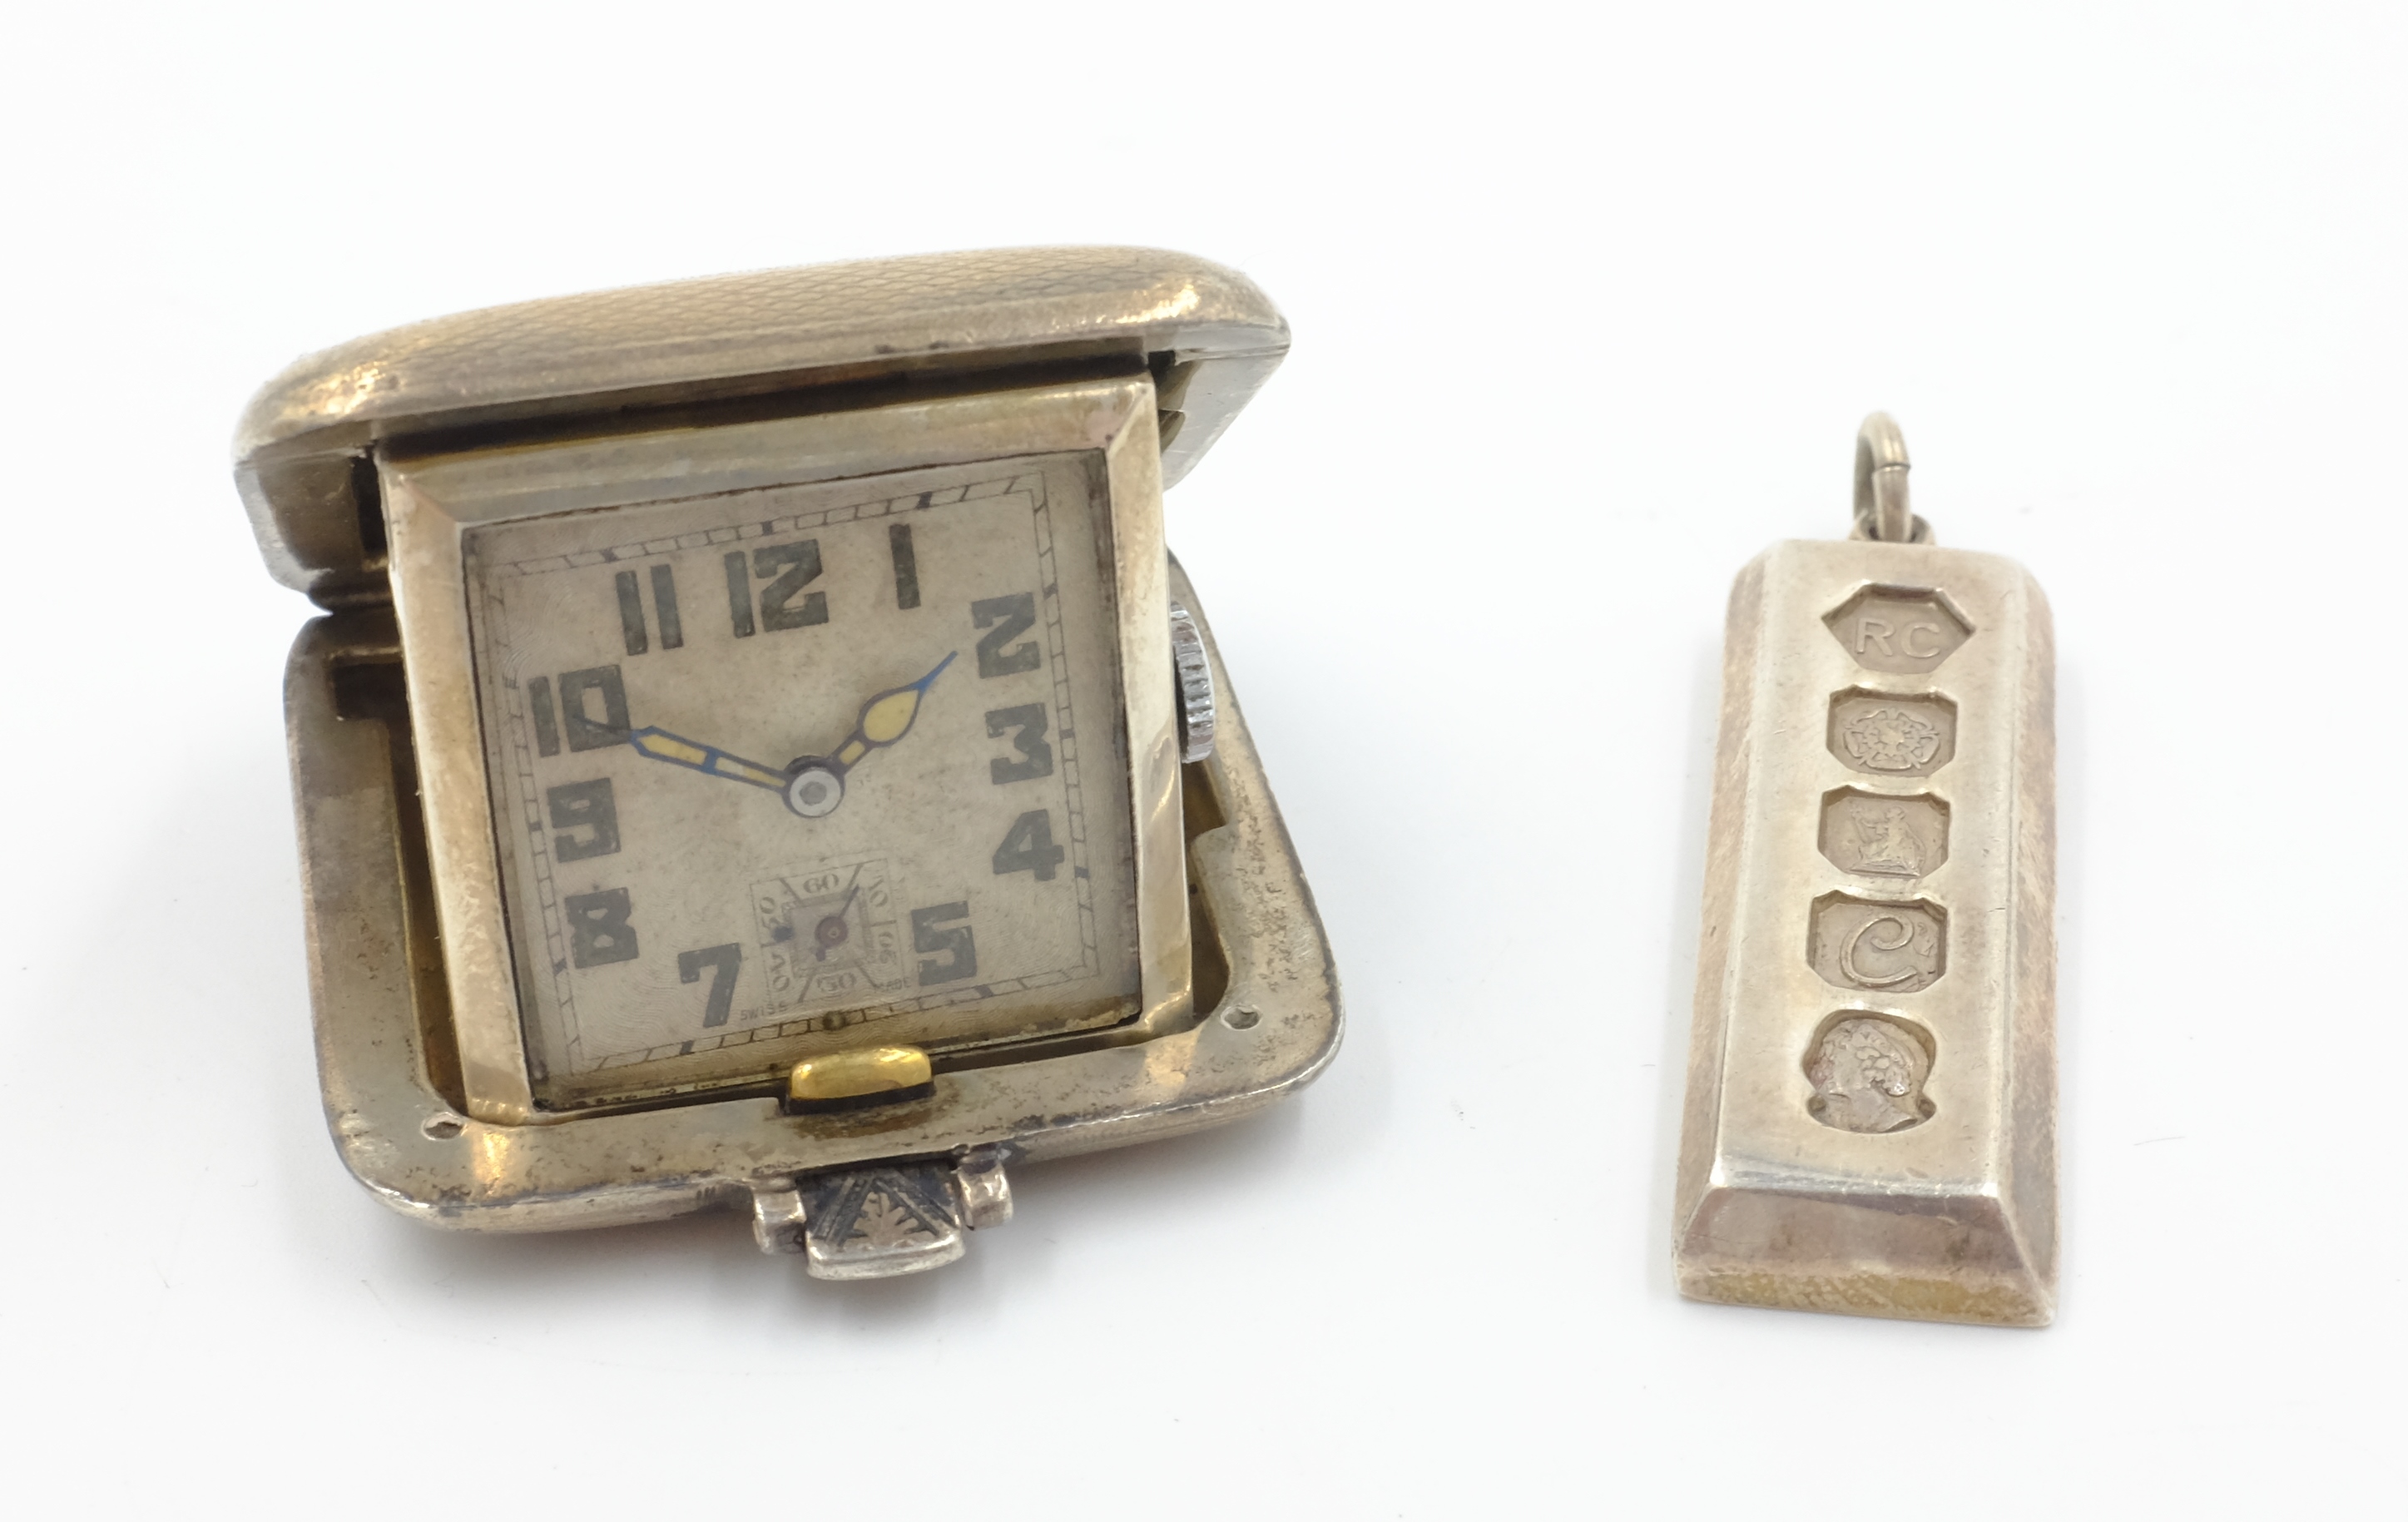 Art Deco silver cased travel clock by SSM Birmingham 1932 4cm square and 1977 Silver Jubilee ingot